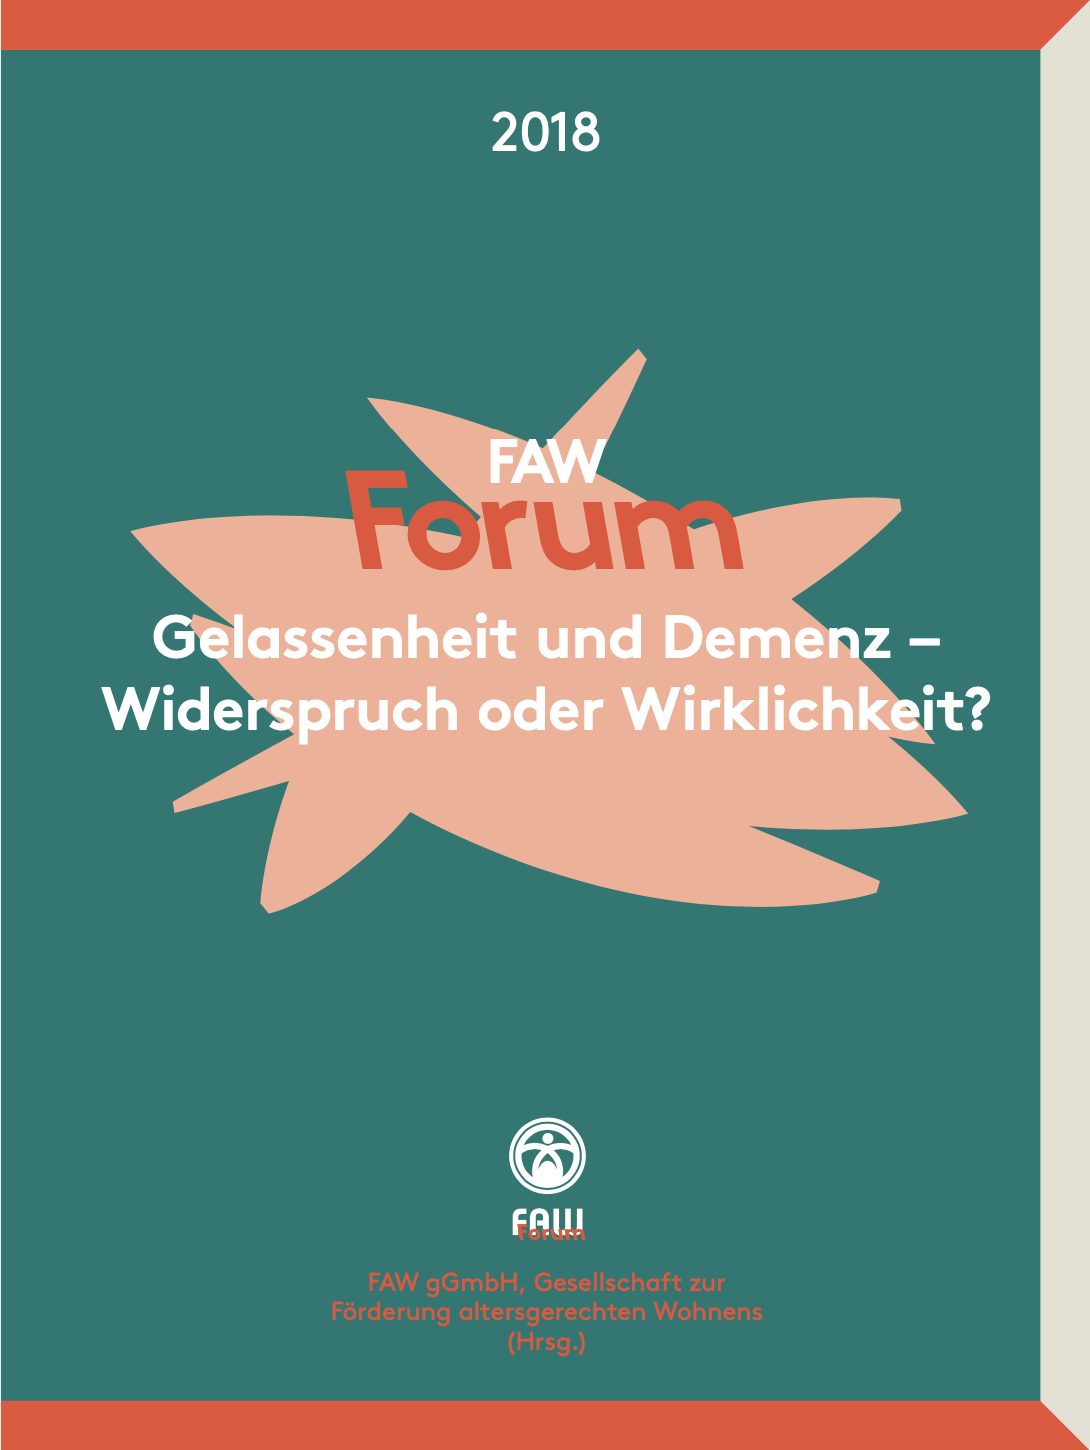 FAW Forum 2018